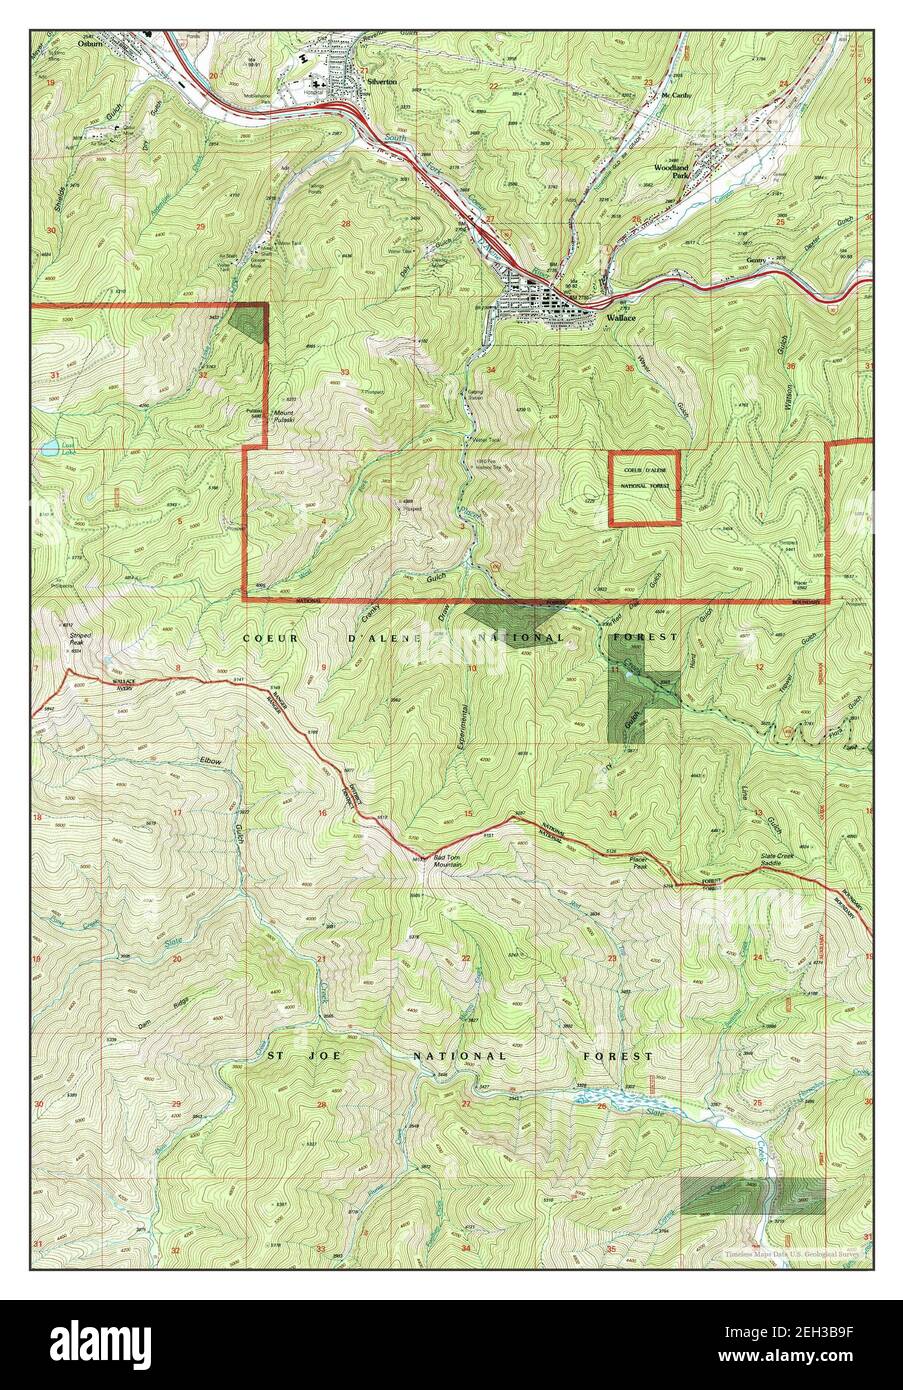 Wallace, Idaho, map 1995, 1:24000, United States of America by Timeless Maps, data U.S. Geological Survey Stock Photo